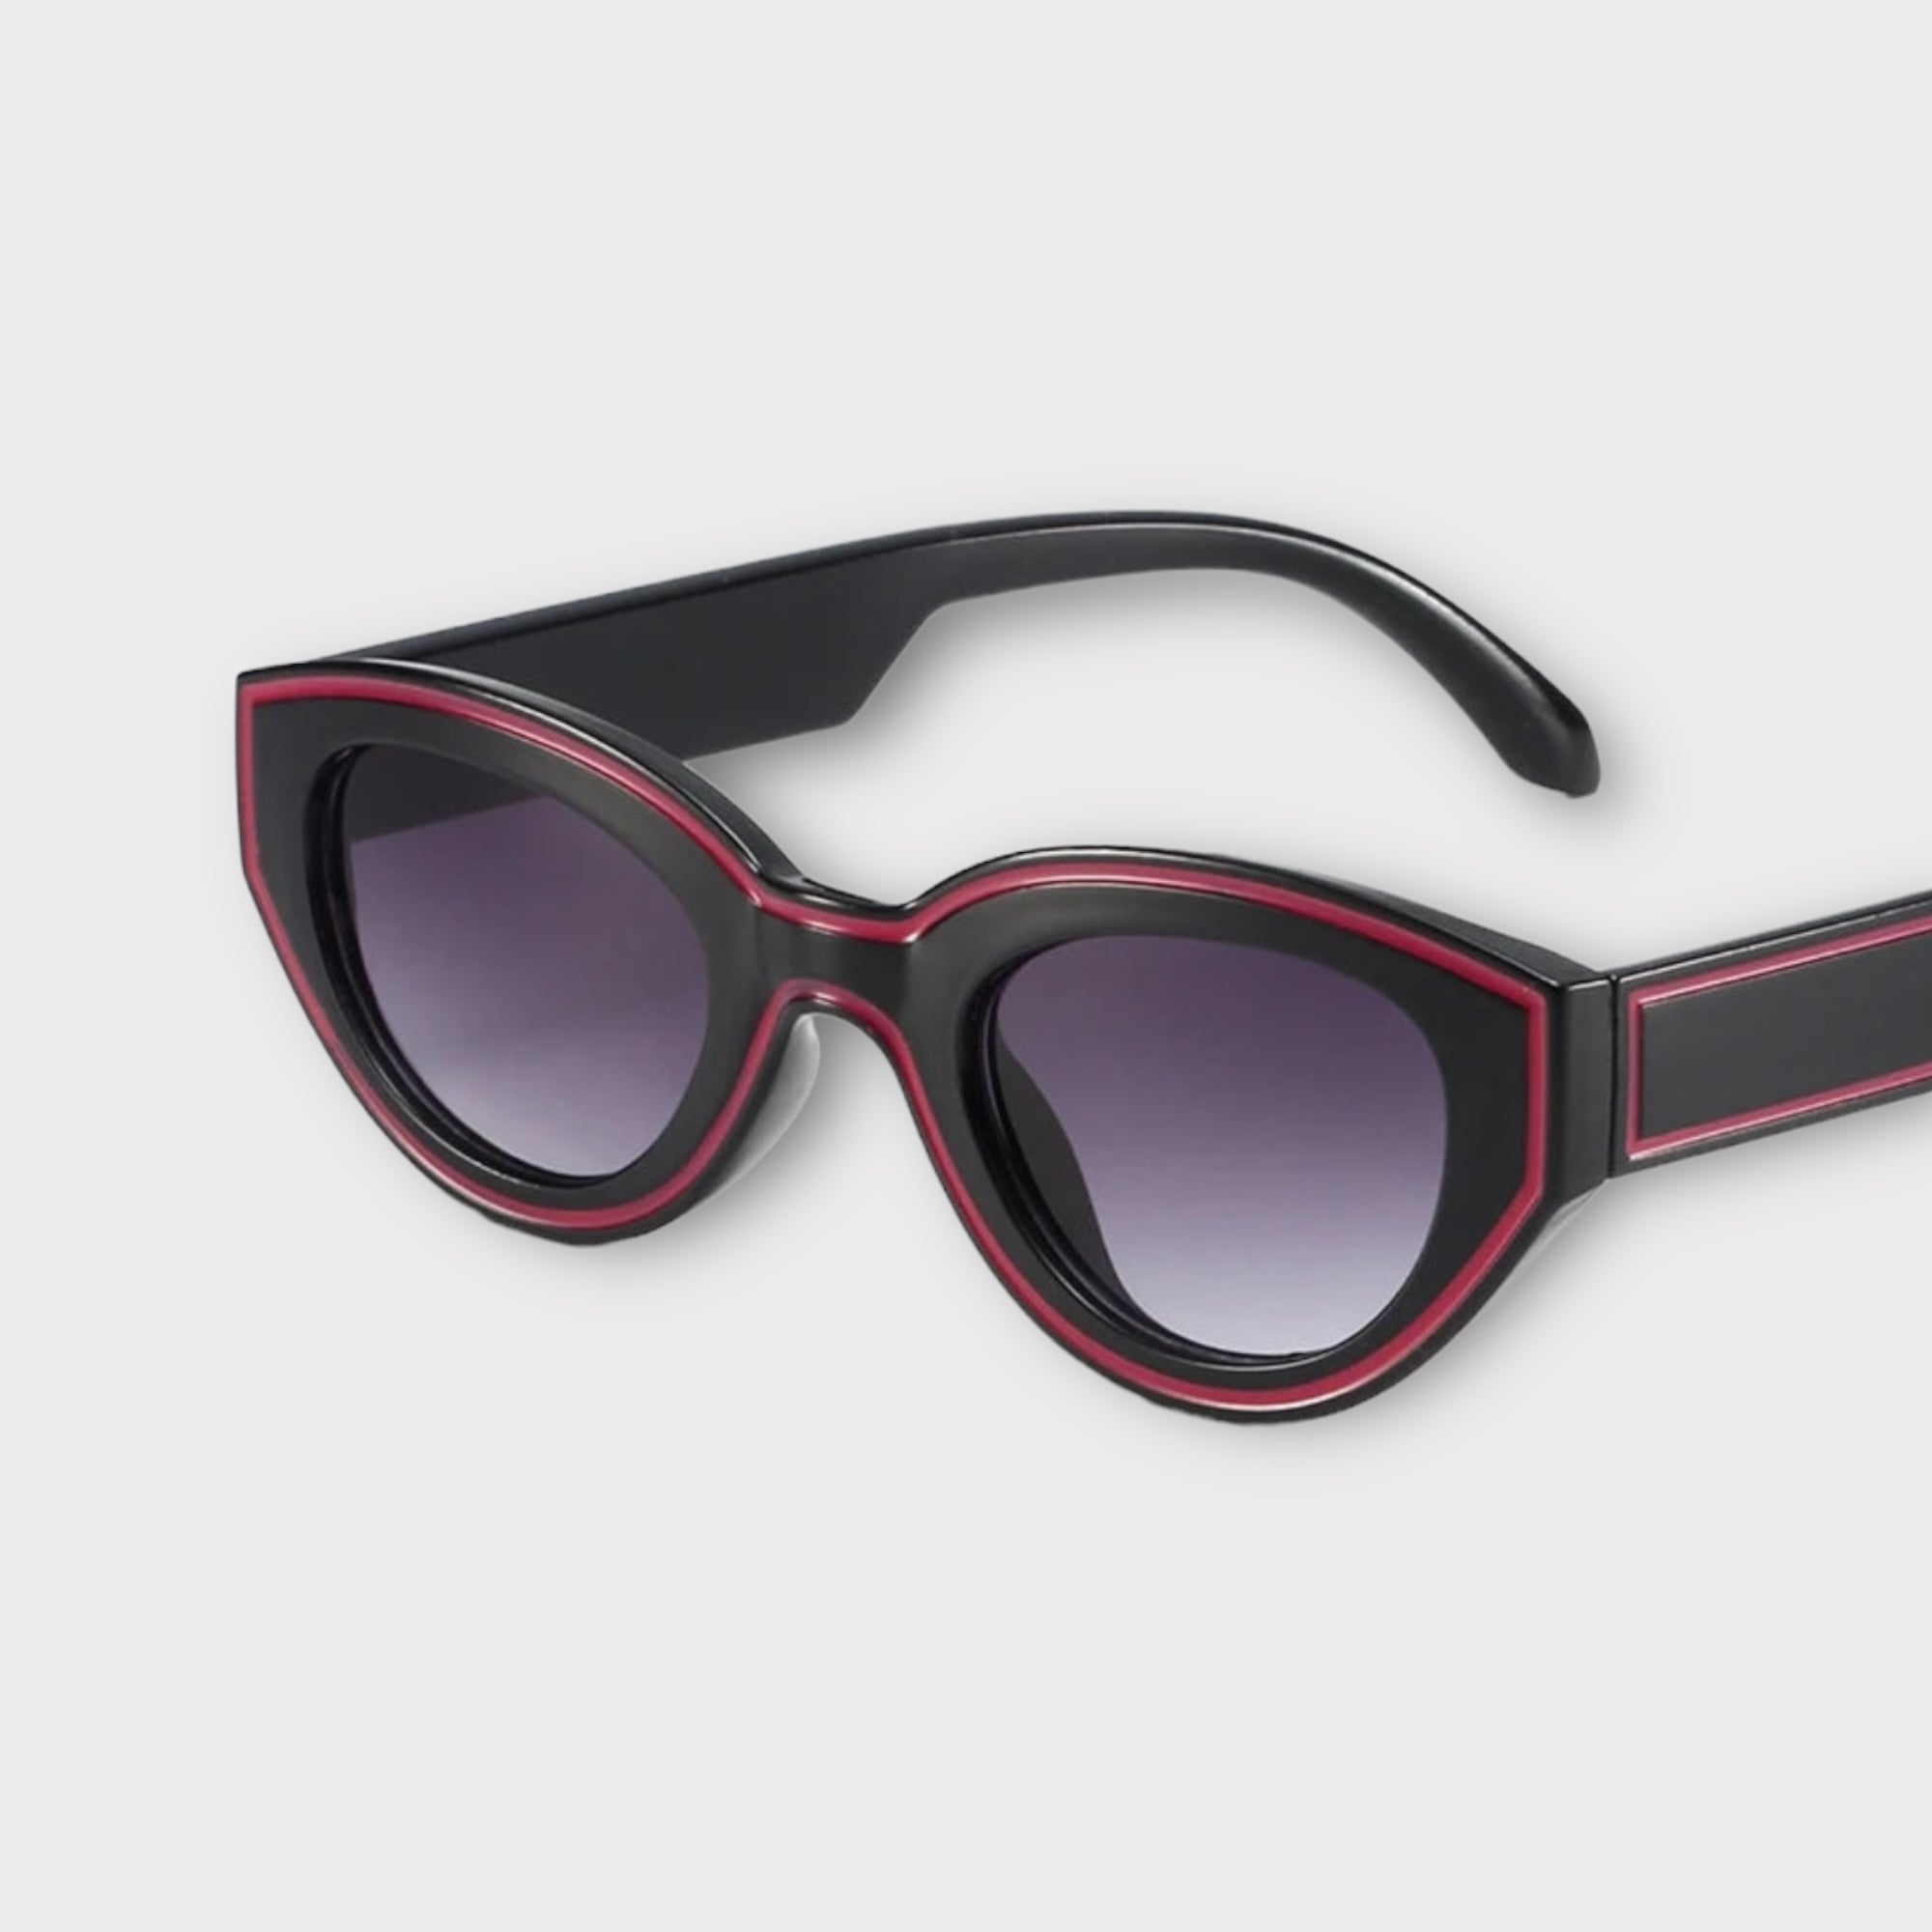 'CBSS' Stylish sunglasses